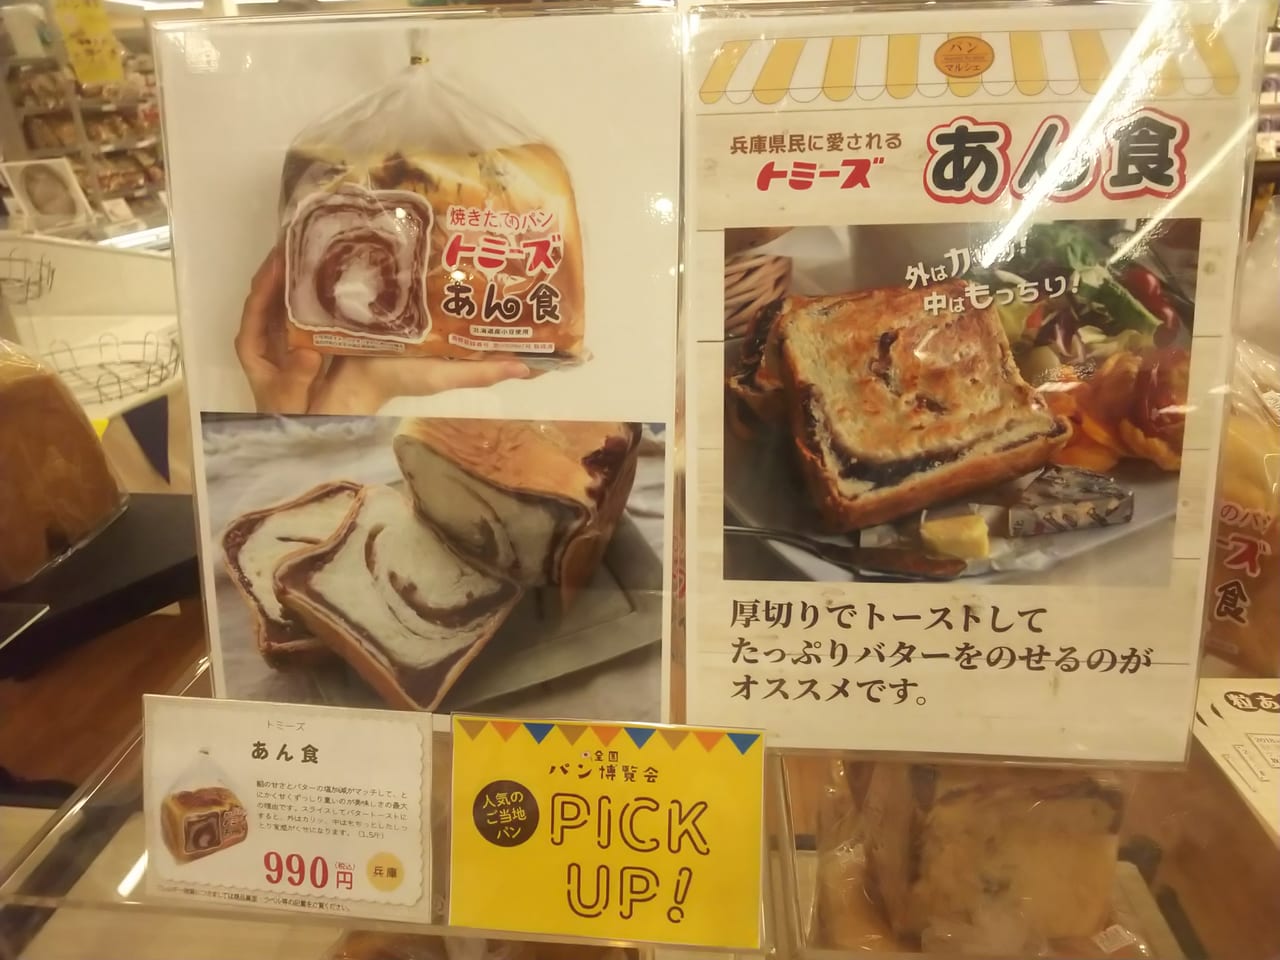 TSUTAYA東広島の「全国パン博覧会」